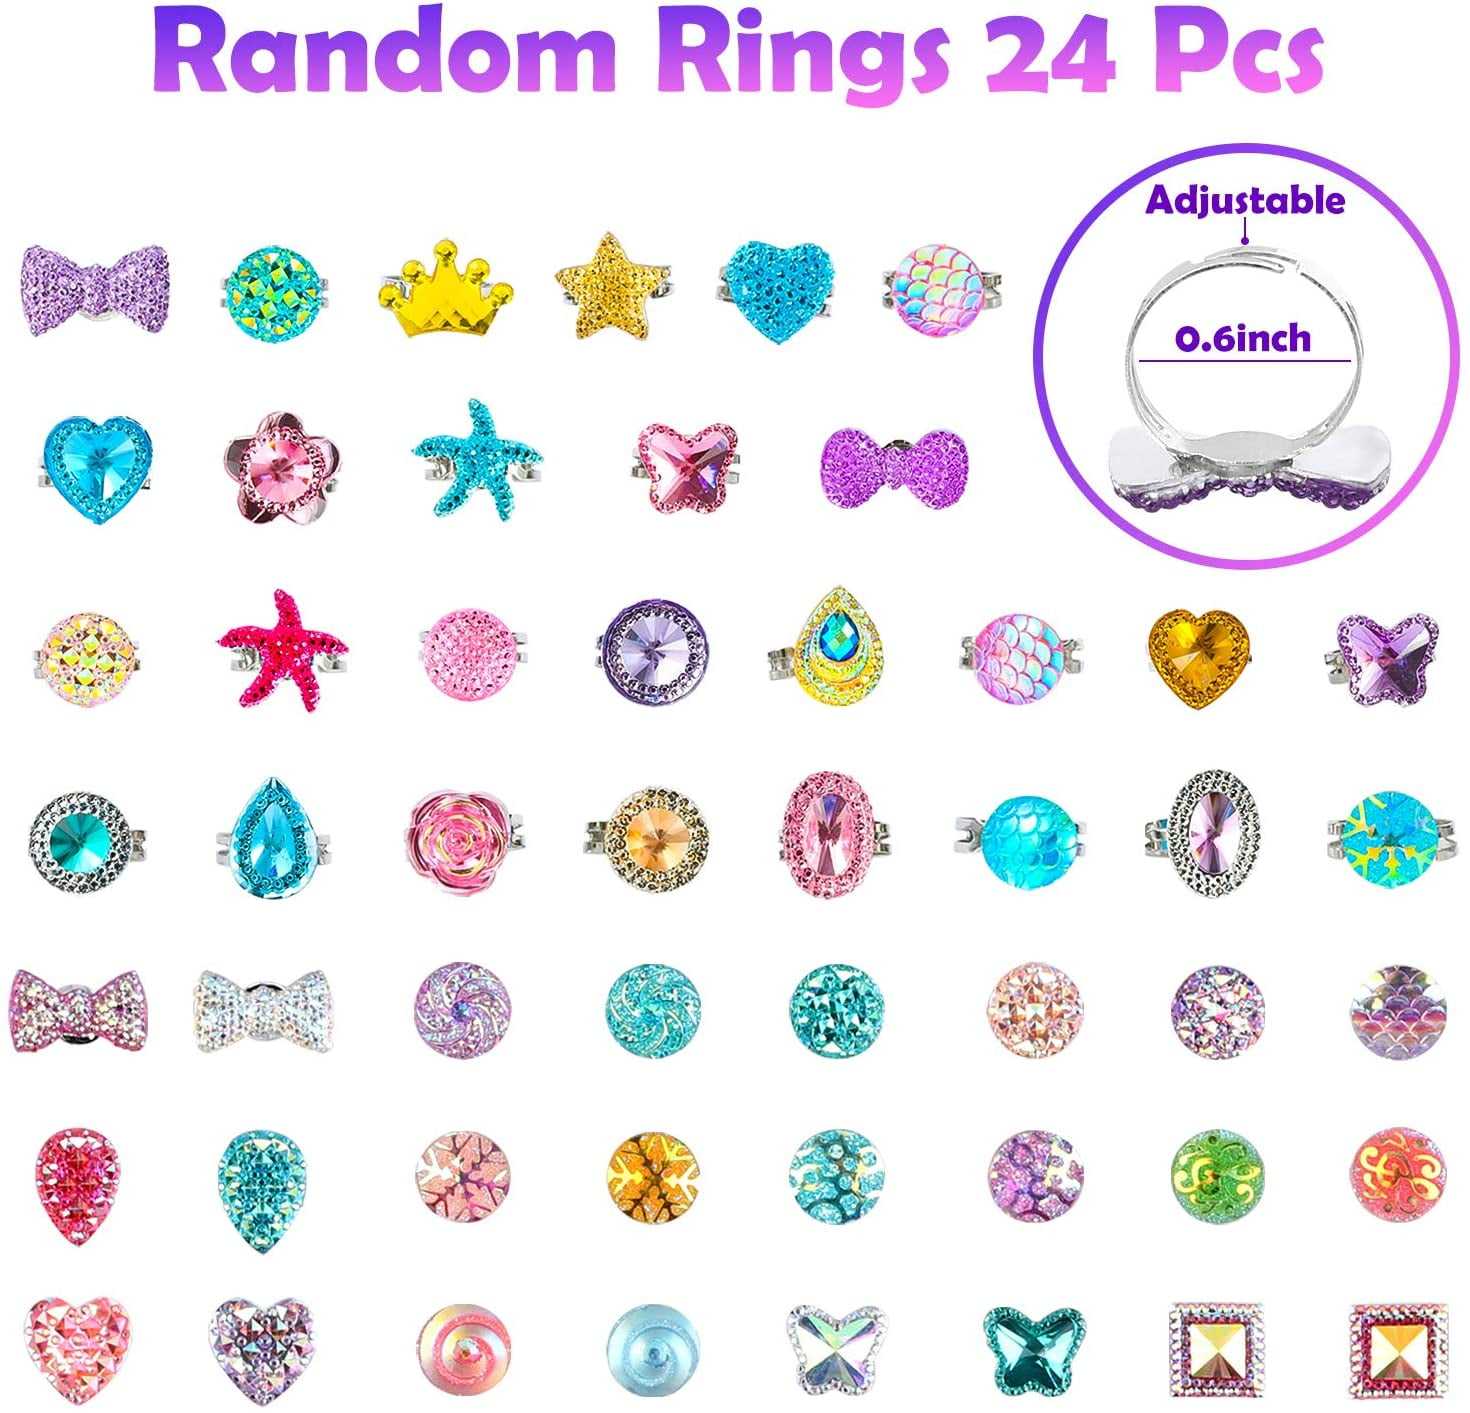 WATINC 62Pcs Mermaid Princess Pretend Jewelry Toy Girl’s Jewelry Dress Up Play Set Shiny Purple Sequin Handbag Necklaces Adjustable Diamond Rings Earrings Bracelets for Little Girls 